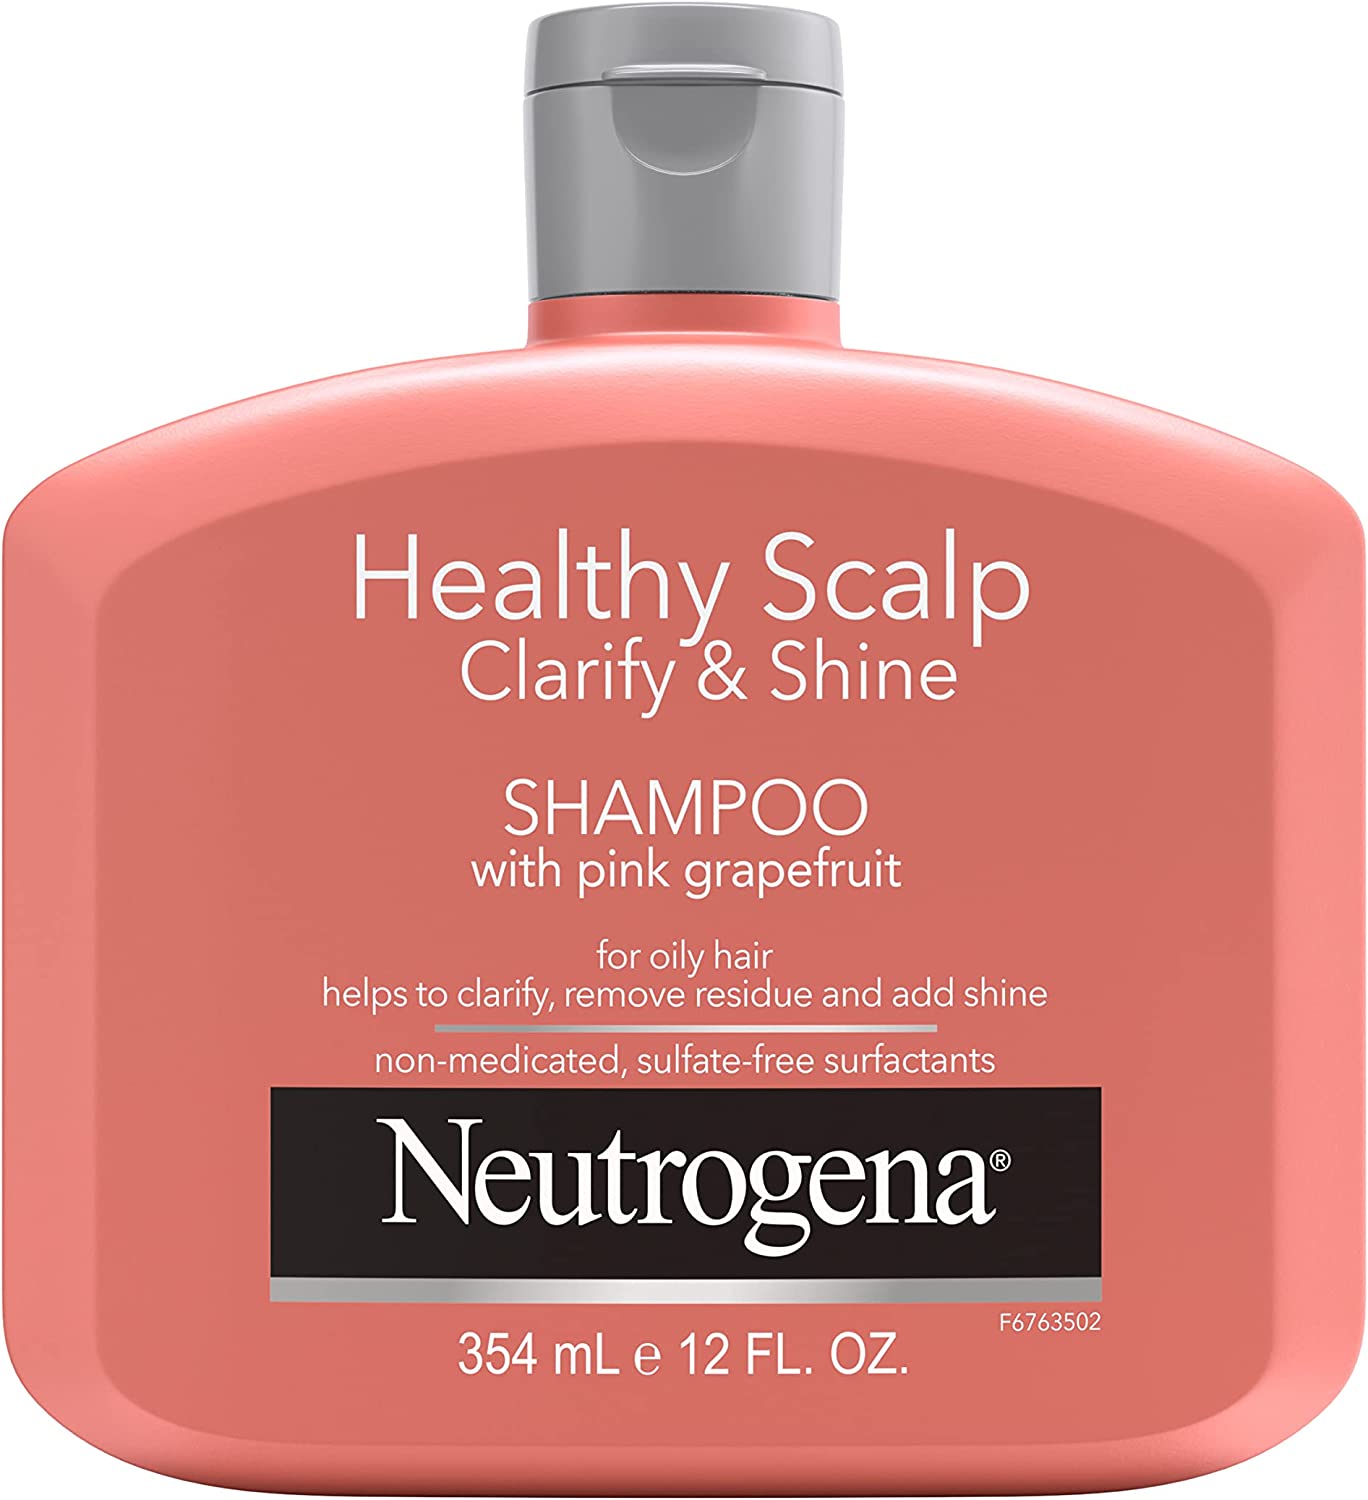 shampoo-de-neutrogena-healthy-scalp